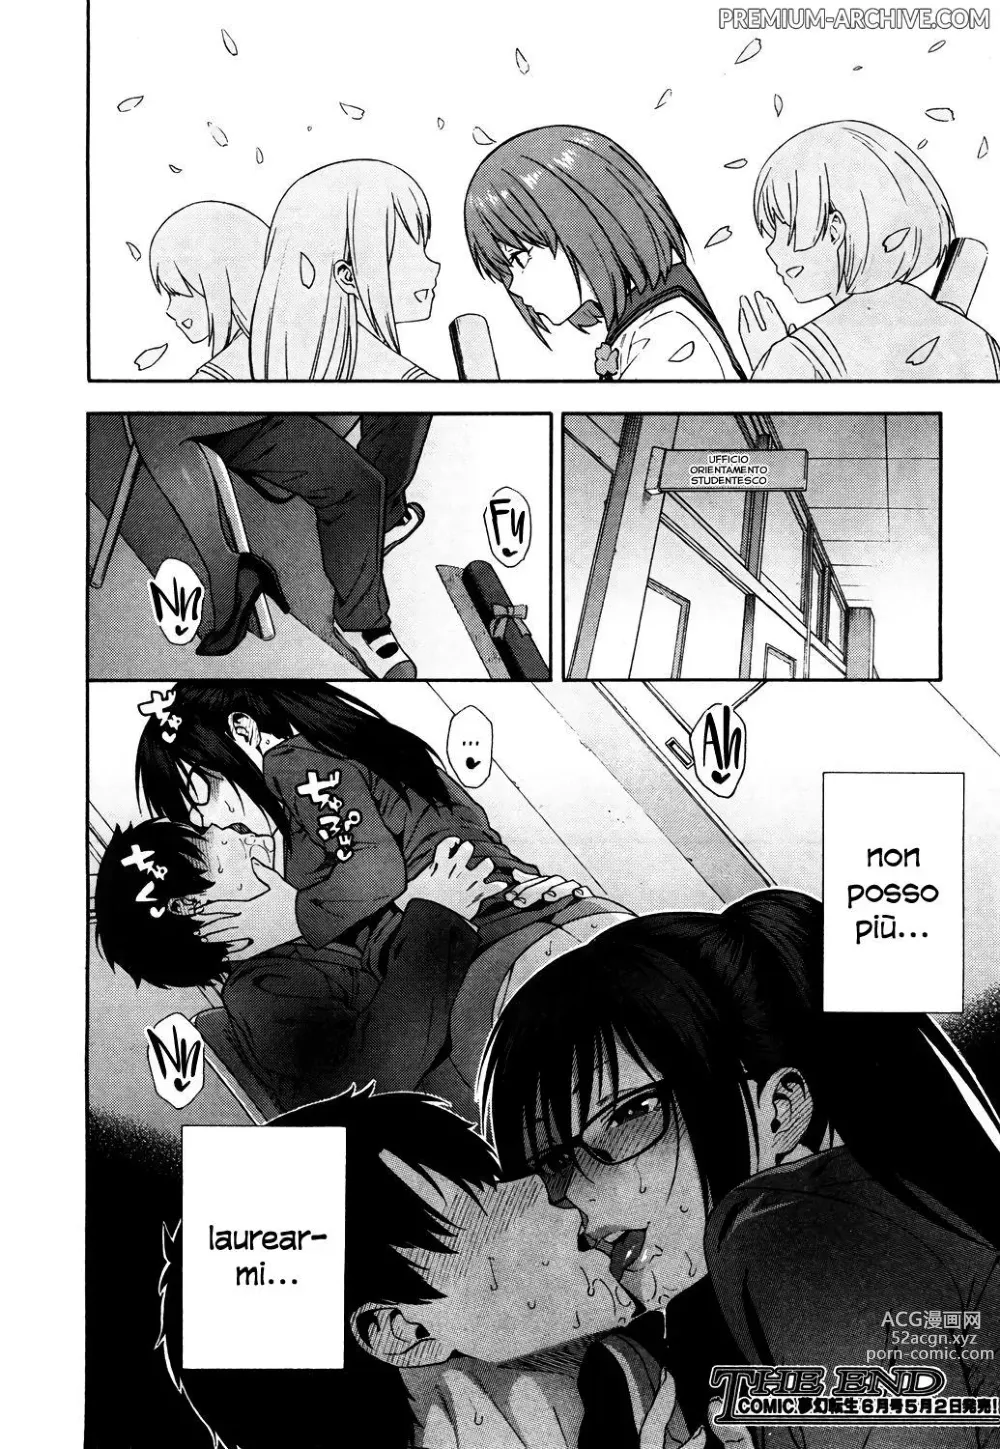 Page 32 of manga La Laurea